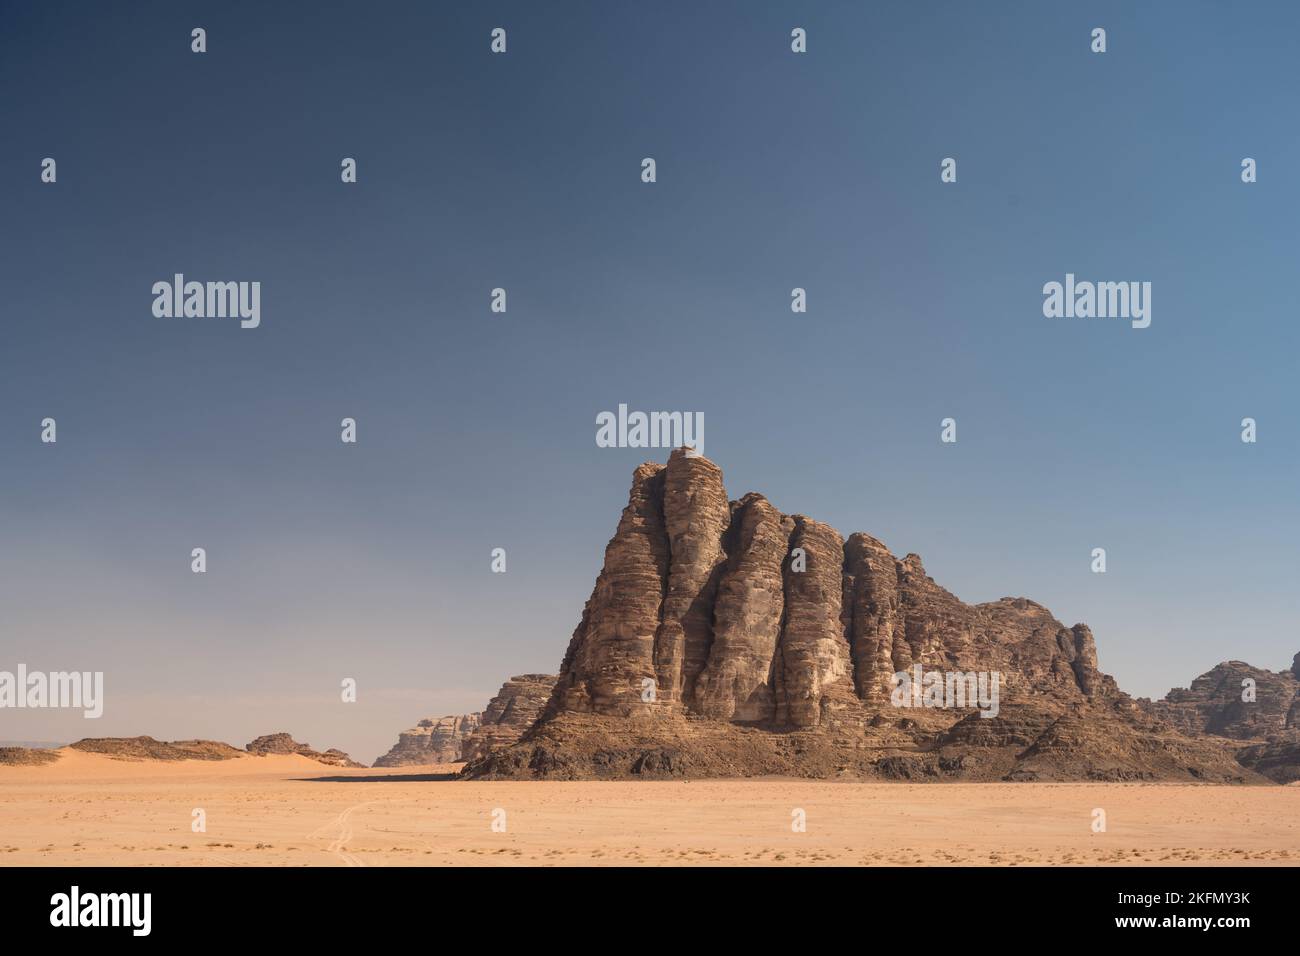 Jabal al arab hi-res stock photography and images - Alamy